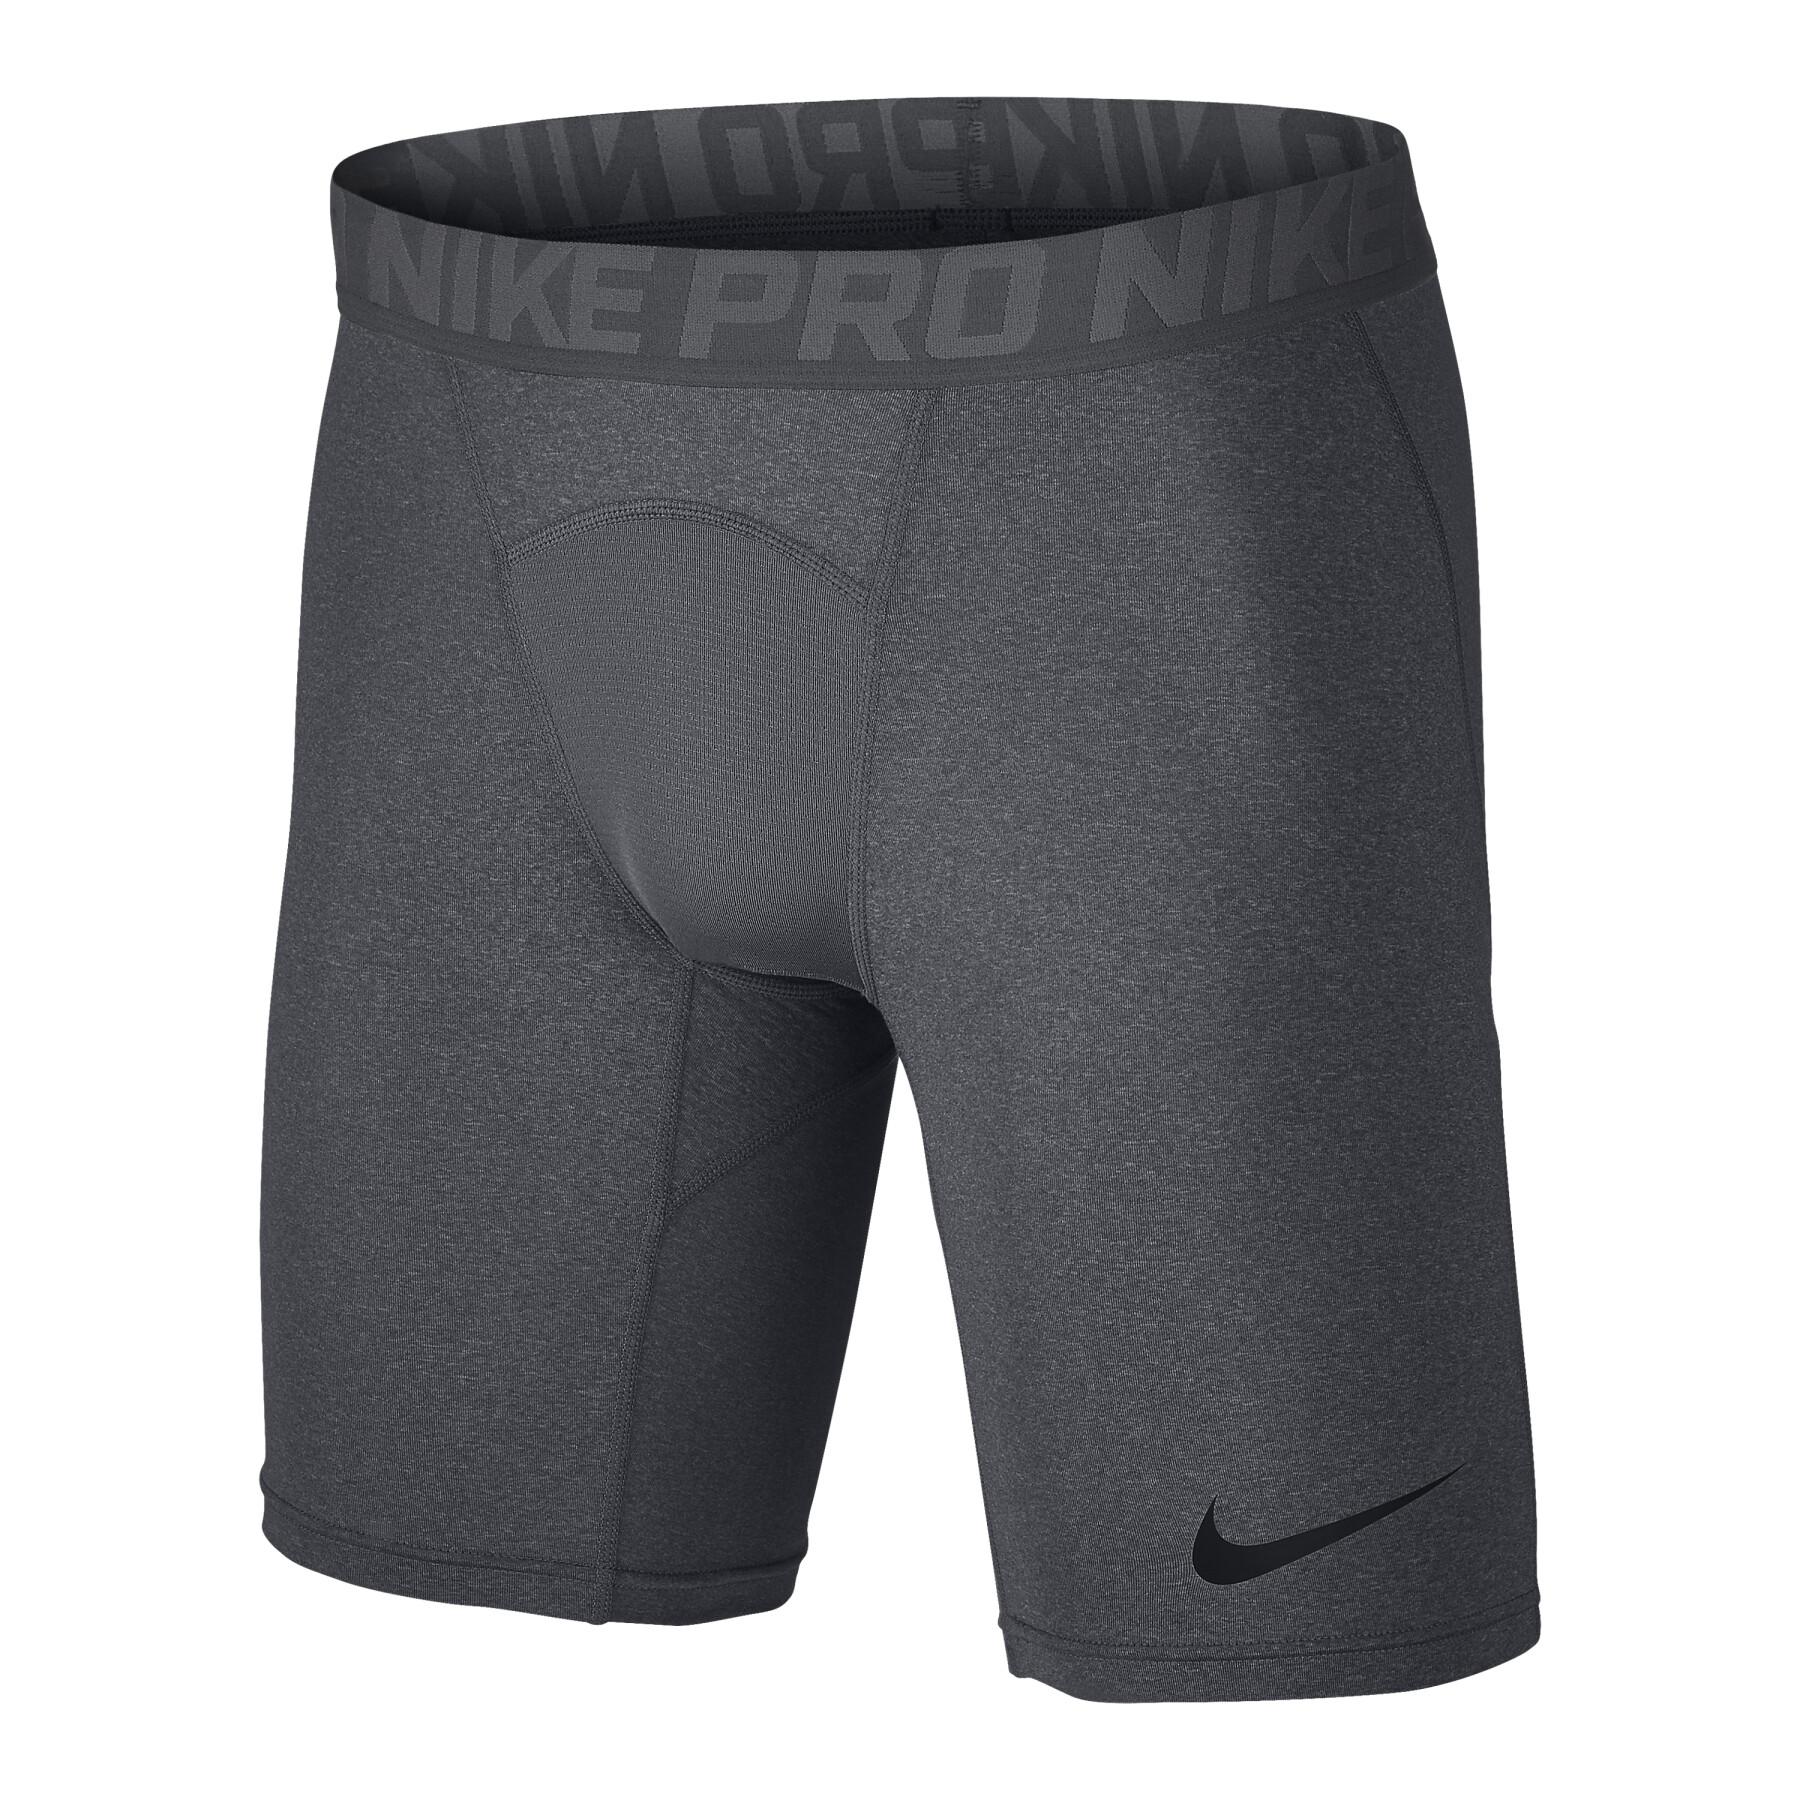 Breve Nike Pro 15 cm